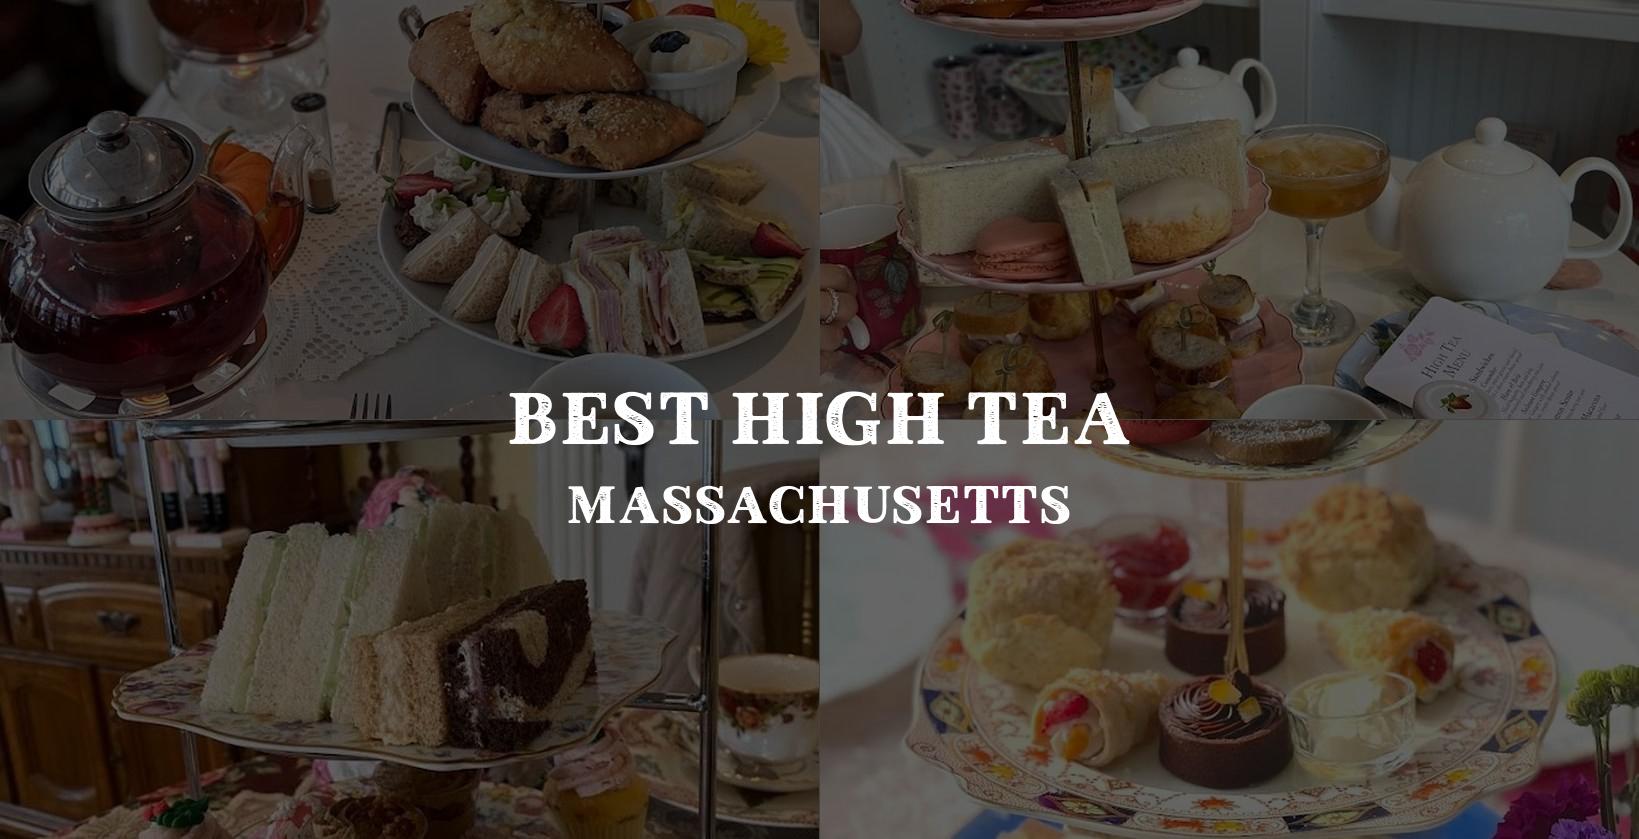 perfect spot for high tea in Massachusetts